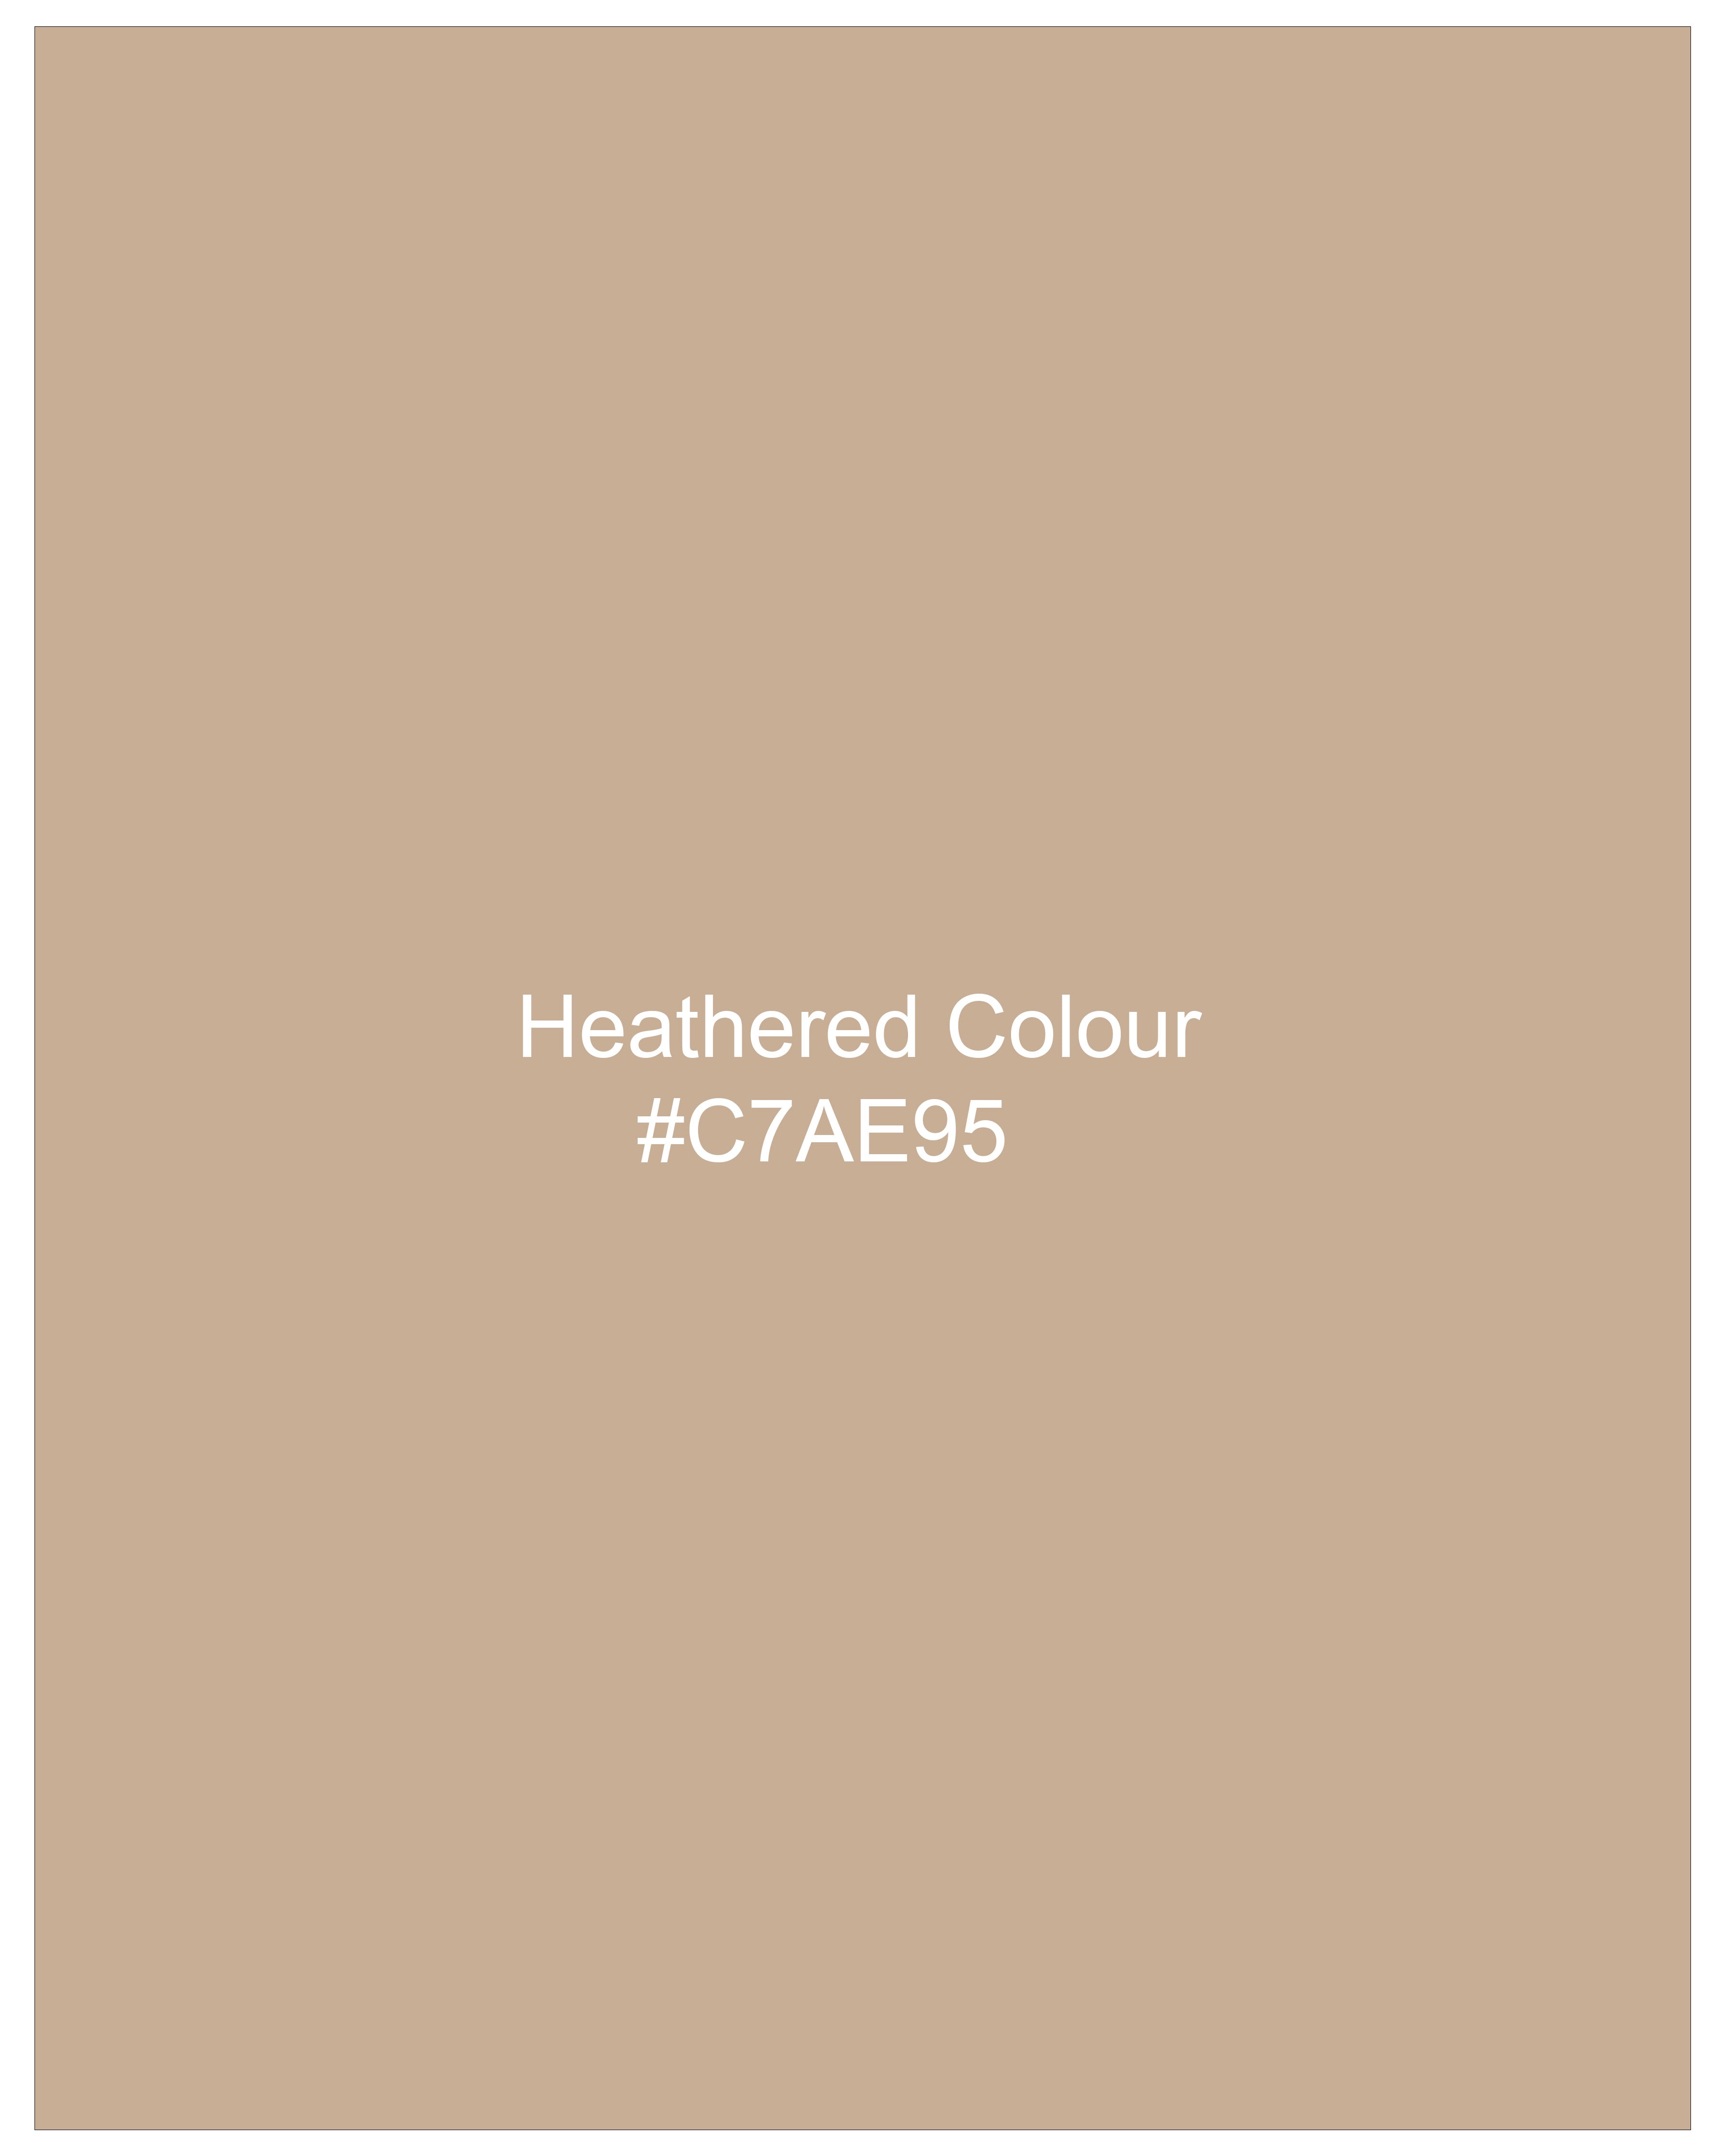 Heathered Light Brown Pant T2718-28, T2718-30, T2718-32, T2718-34, T2718-36, T2718-38, T2718-40, T2718-42, T2718-44